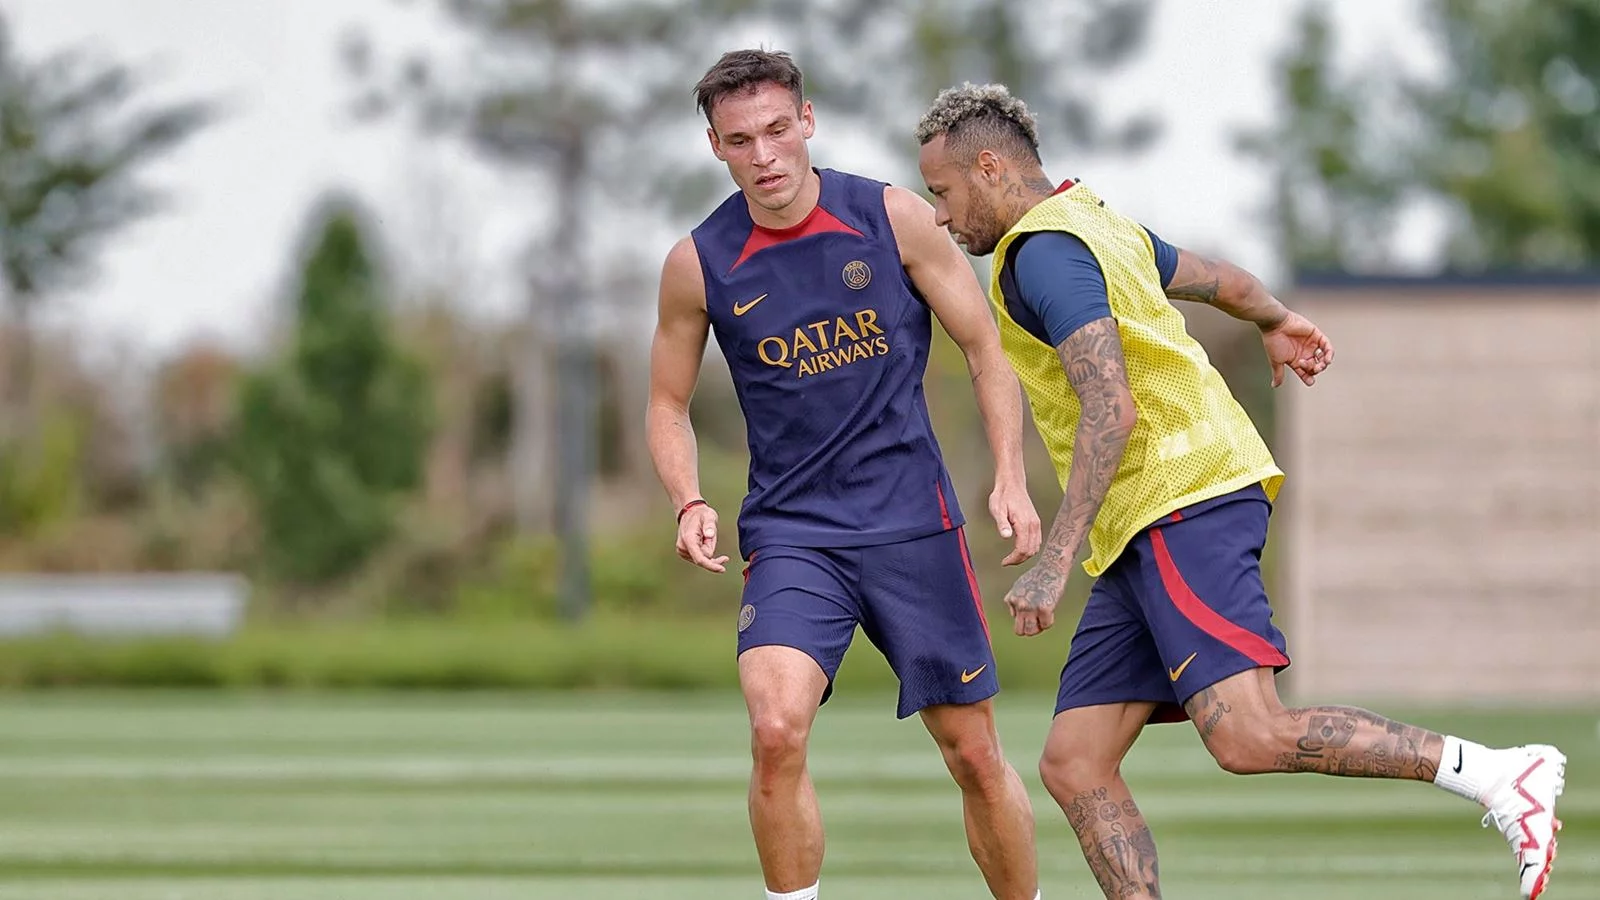 Para onde vai Neymar? Astro quer voltar ao Barcelona, mas enfrenta dificuldades para ser negociado - (La séance d’entraînement)